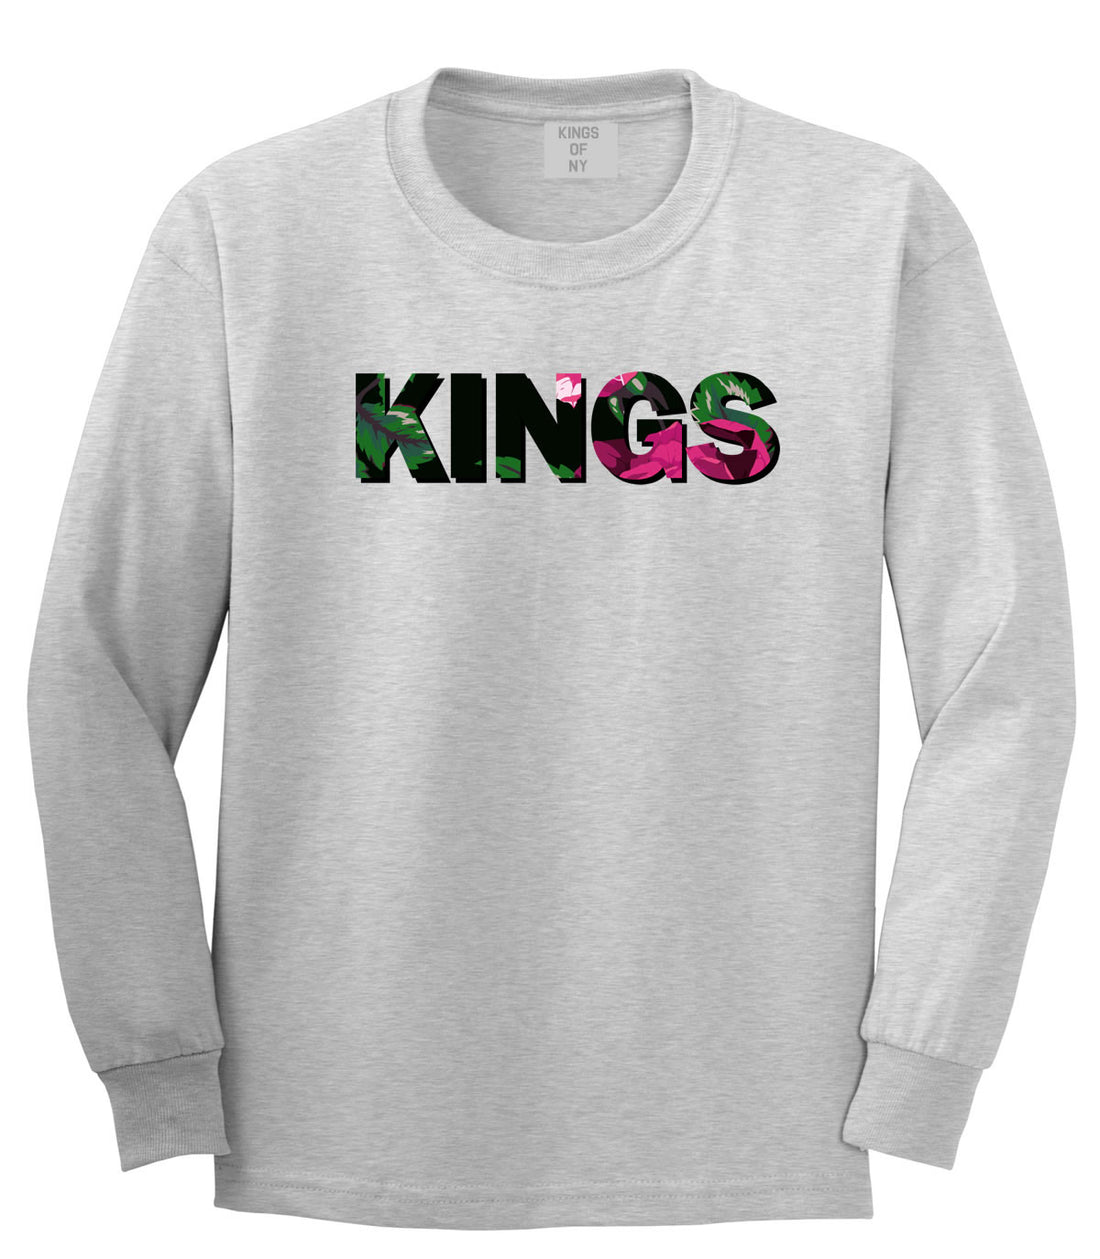 Kings Floral Print Pattern Boys Kids Long Sleeve T-Shirt in Grey by Kings Of NY